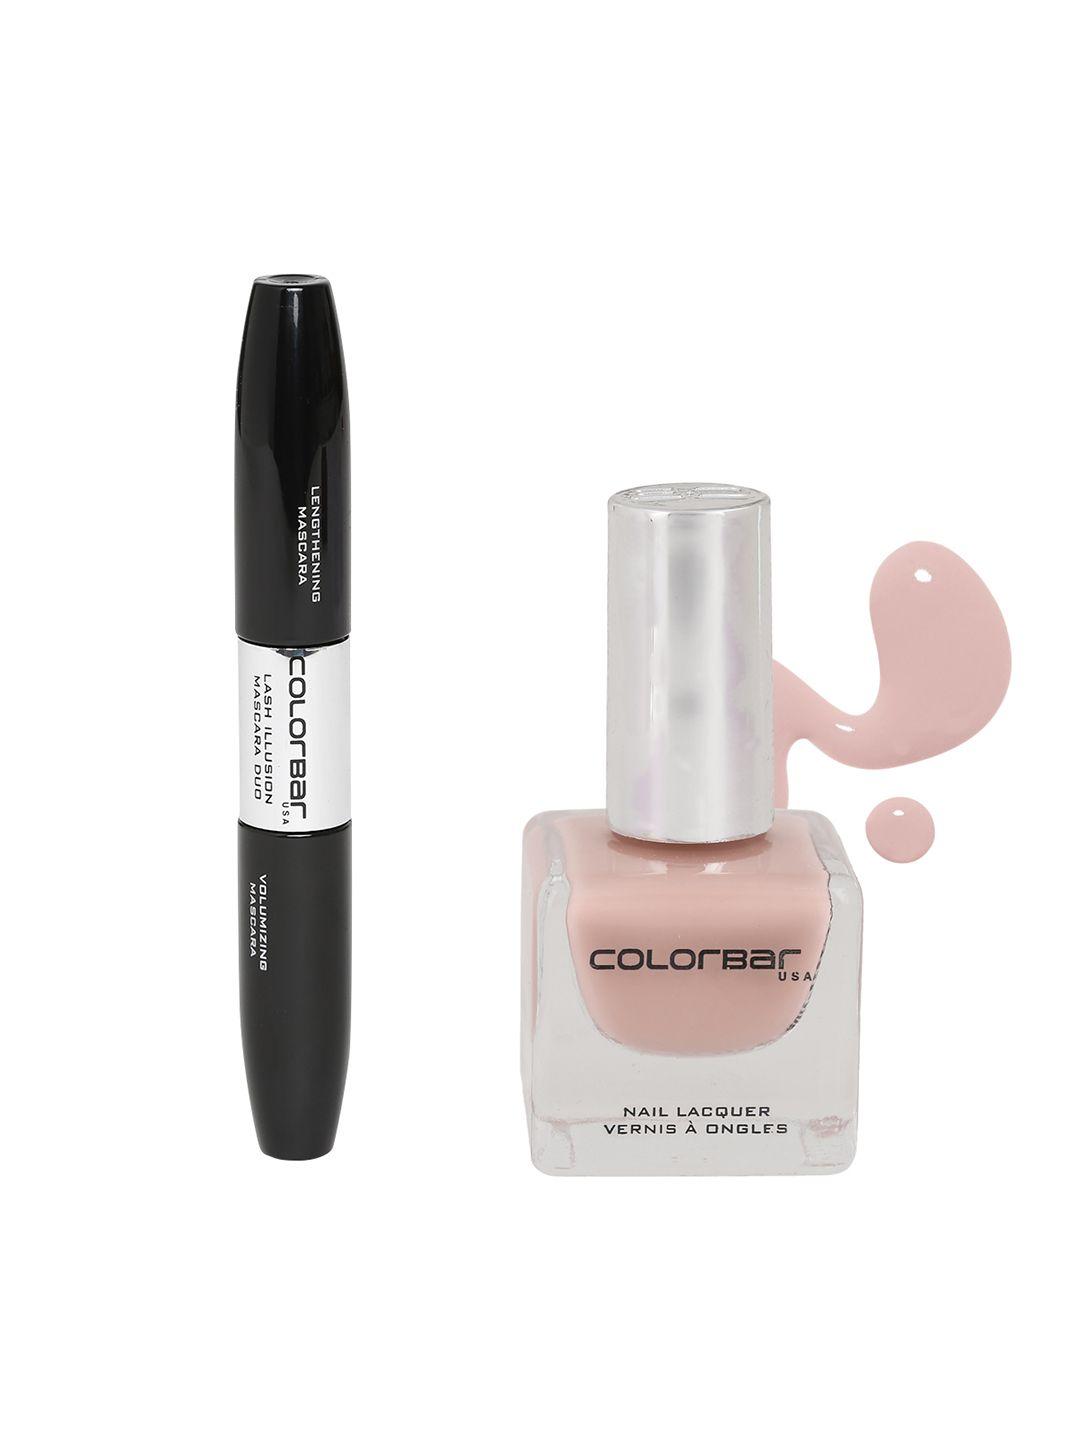 colorbar lash illusion mascara dm001 & pink crepe luxe nail lacquer 128